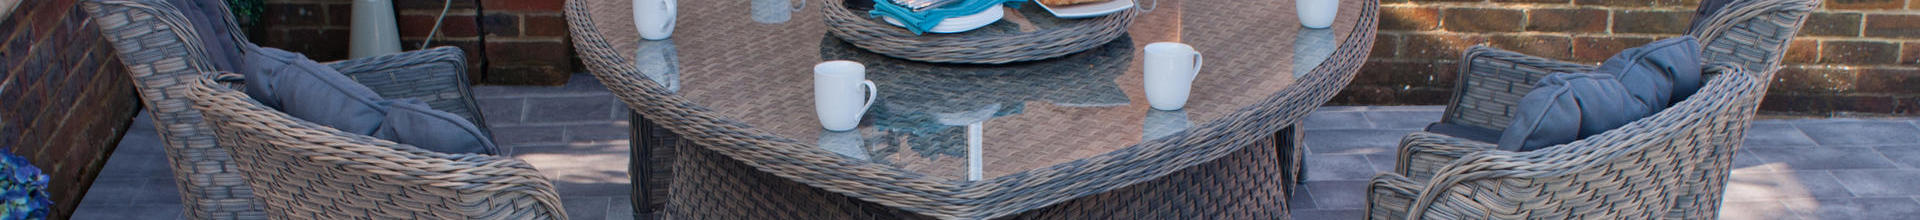 Rueda Woodash 160x160cm Triangular Dining Set